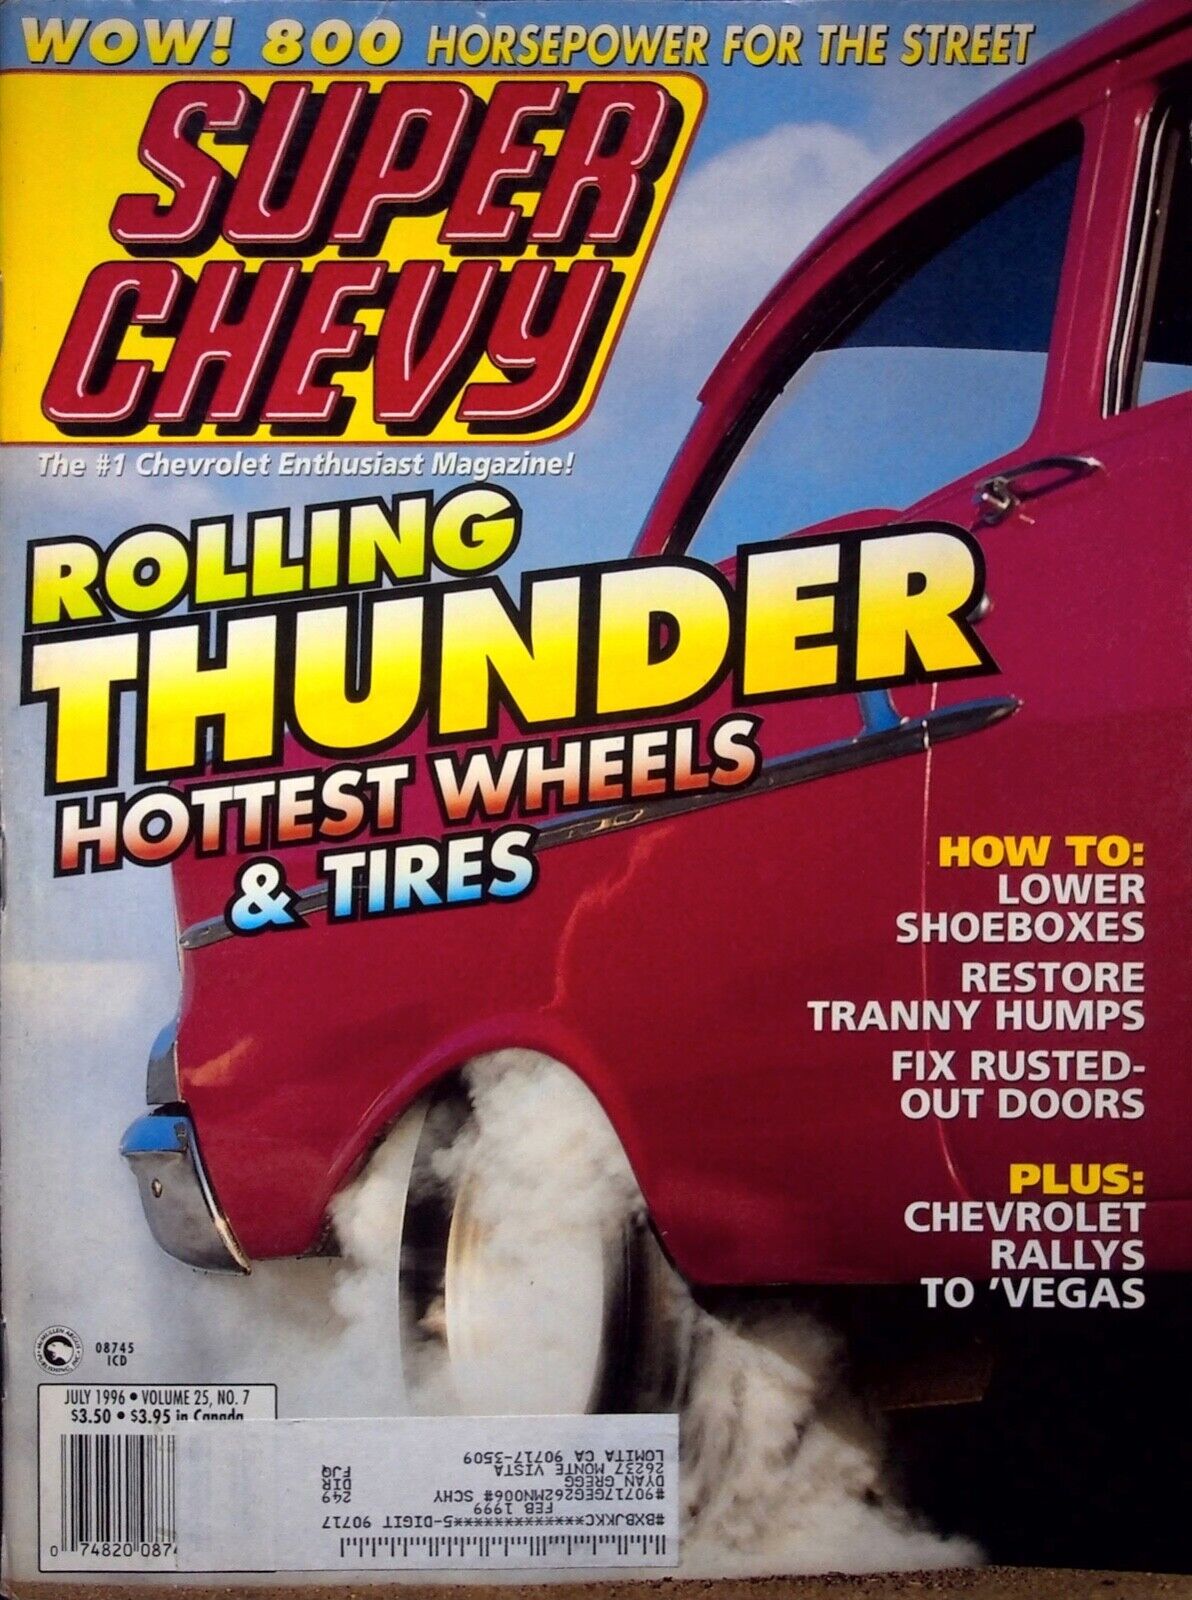 HOTTEST WHEELS TIRES - SUPER CHEVY MAGAZINE, JULY 1996